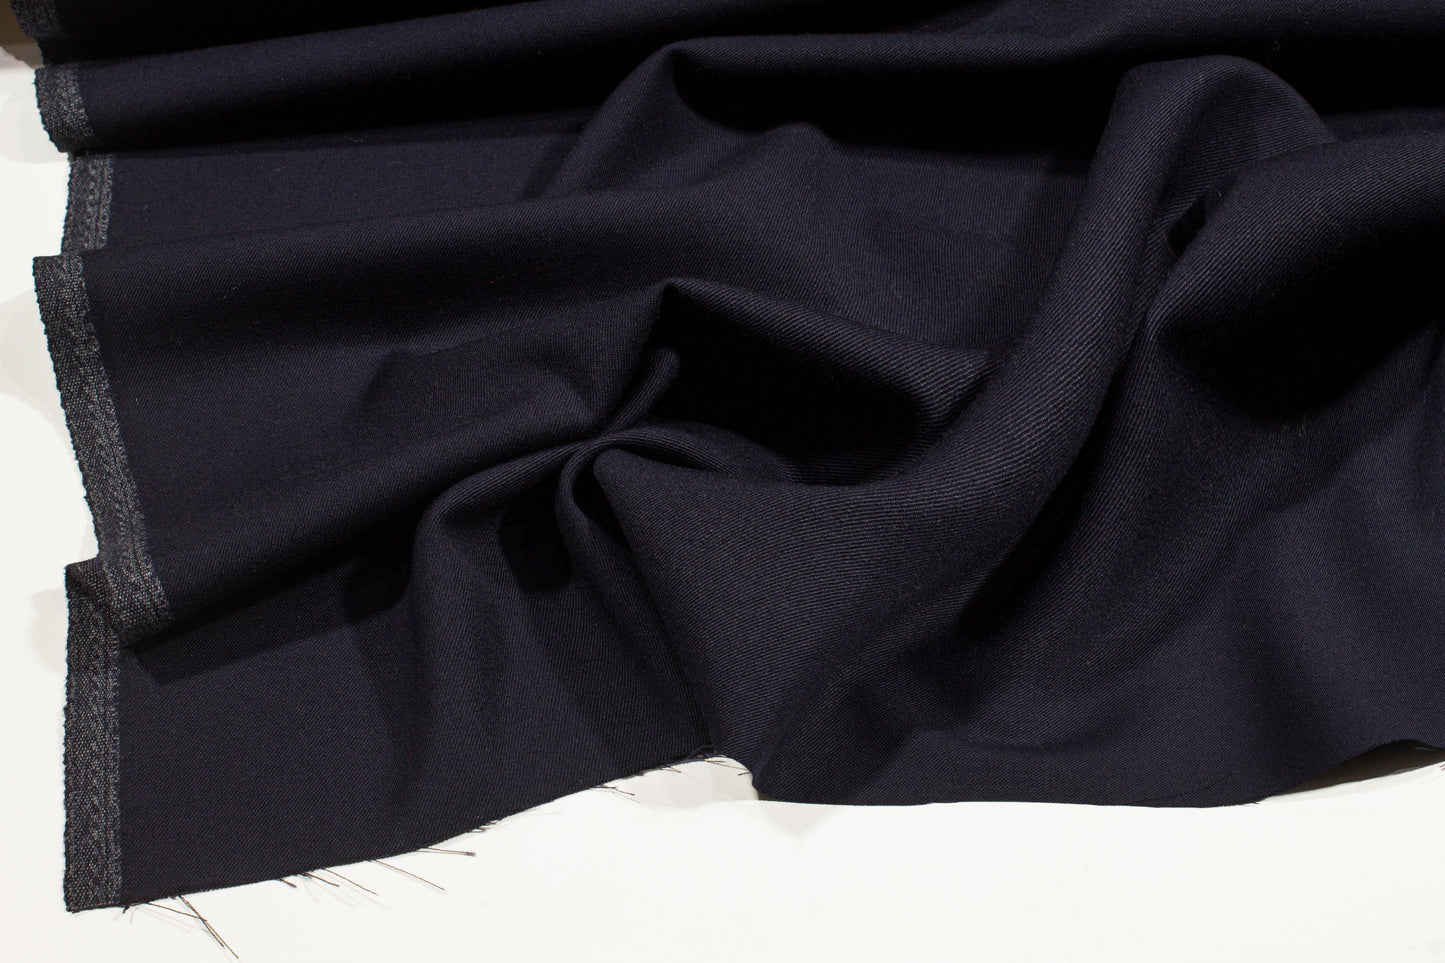 Navy Blue Italian Wool Suiting - Prime Fabrics